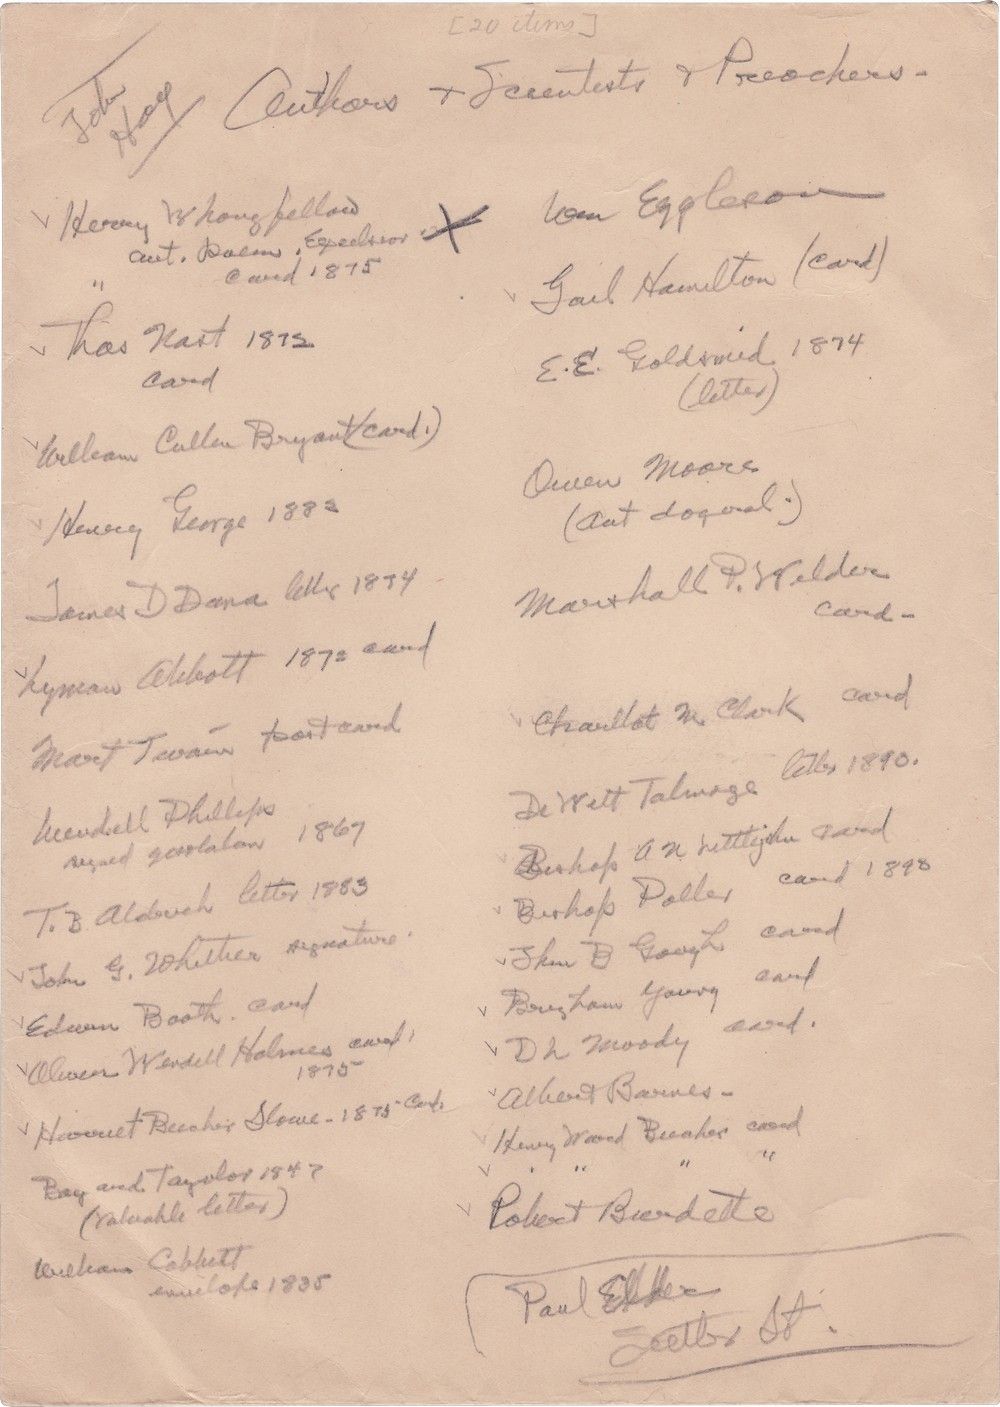 Herbert Hoover's Handwritten List of His Autograph Collection